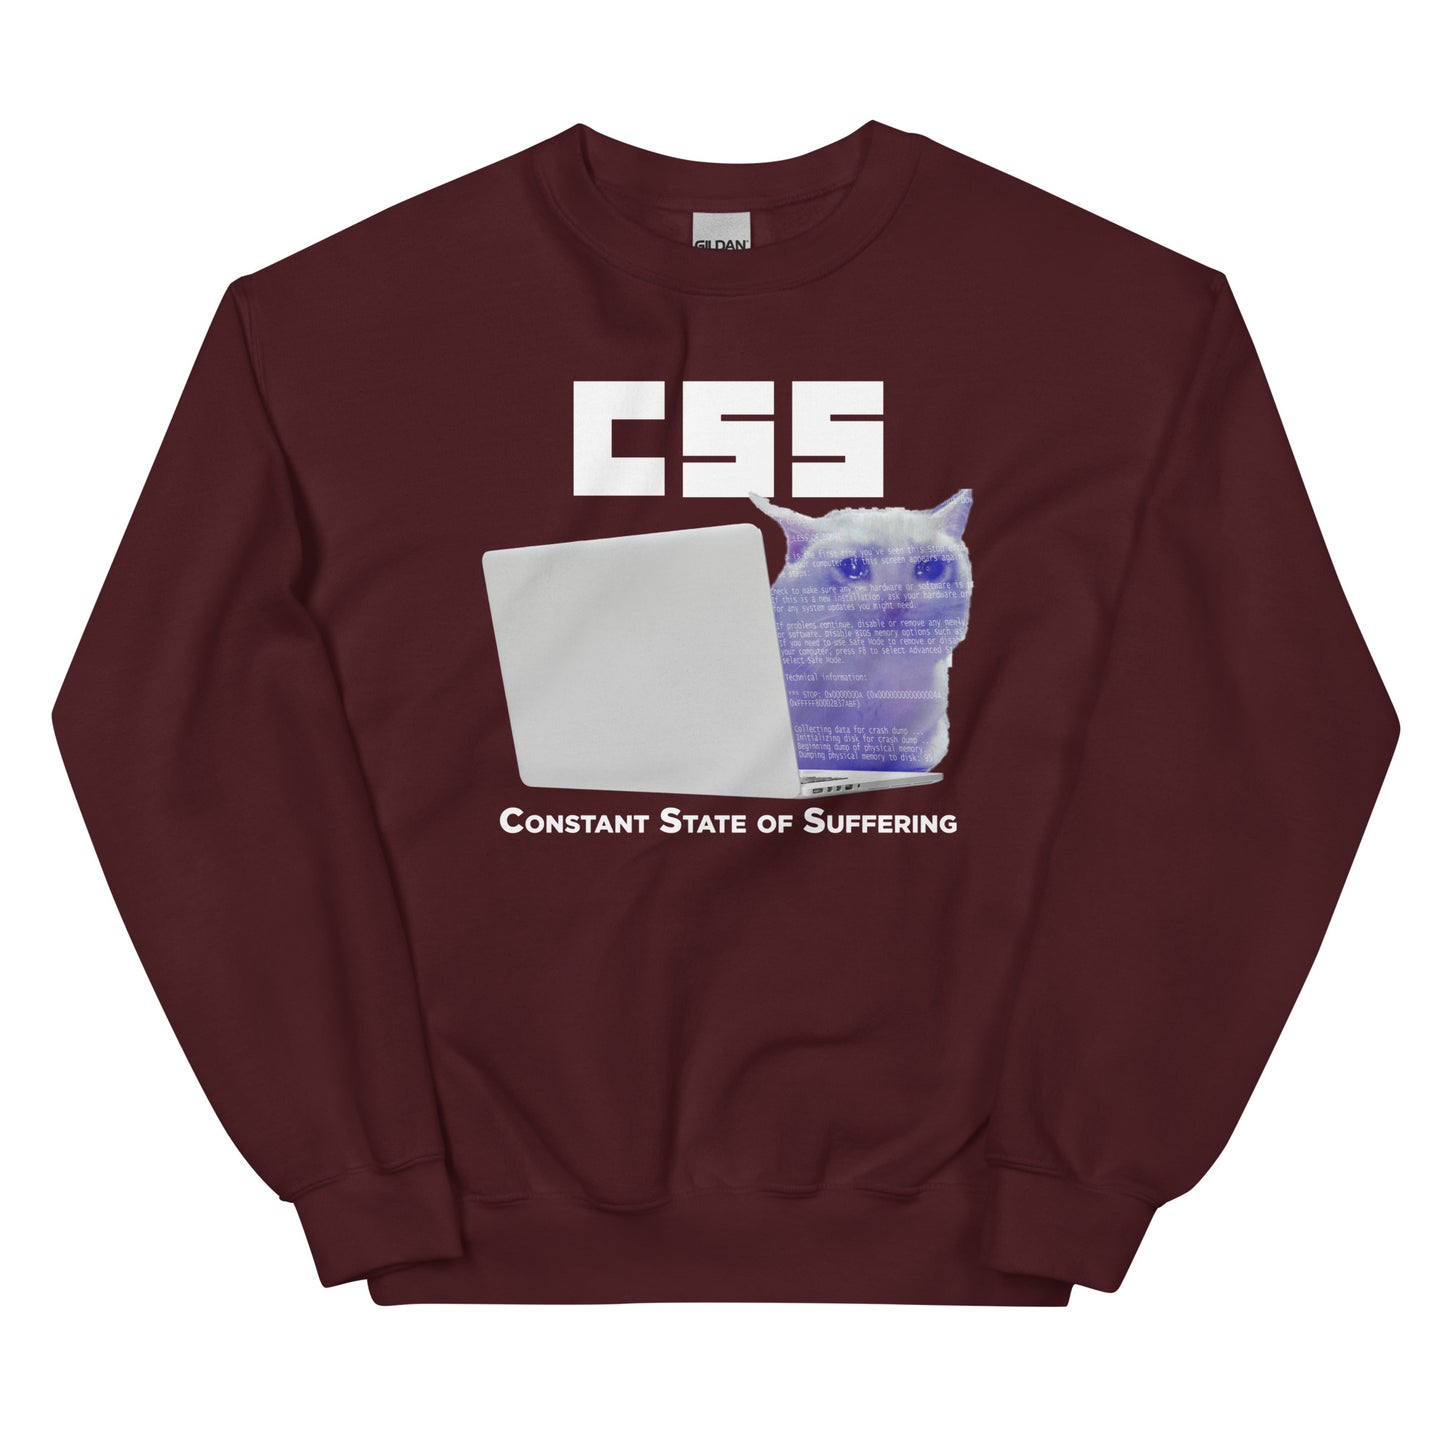 CSS (Constant State of Suffering) Unisex Sweatshirt